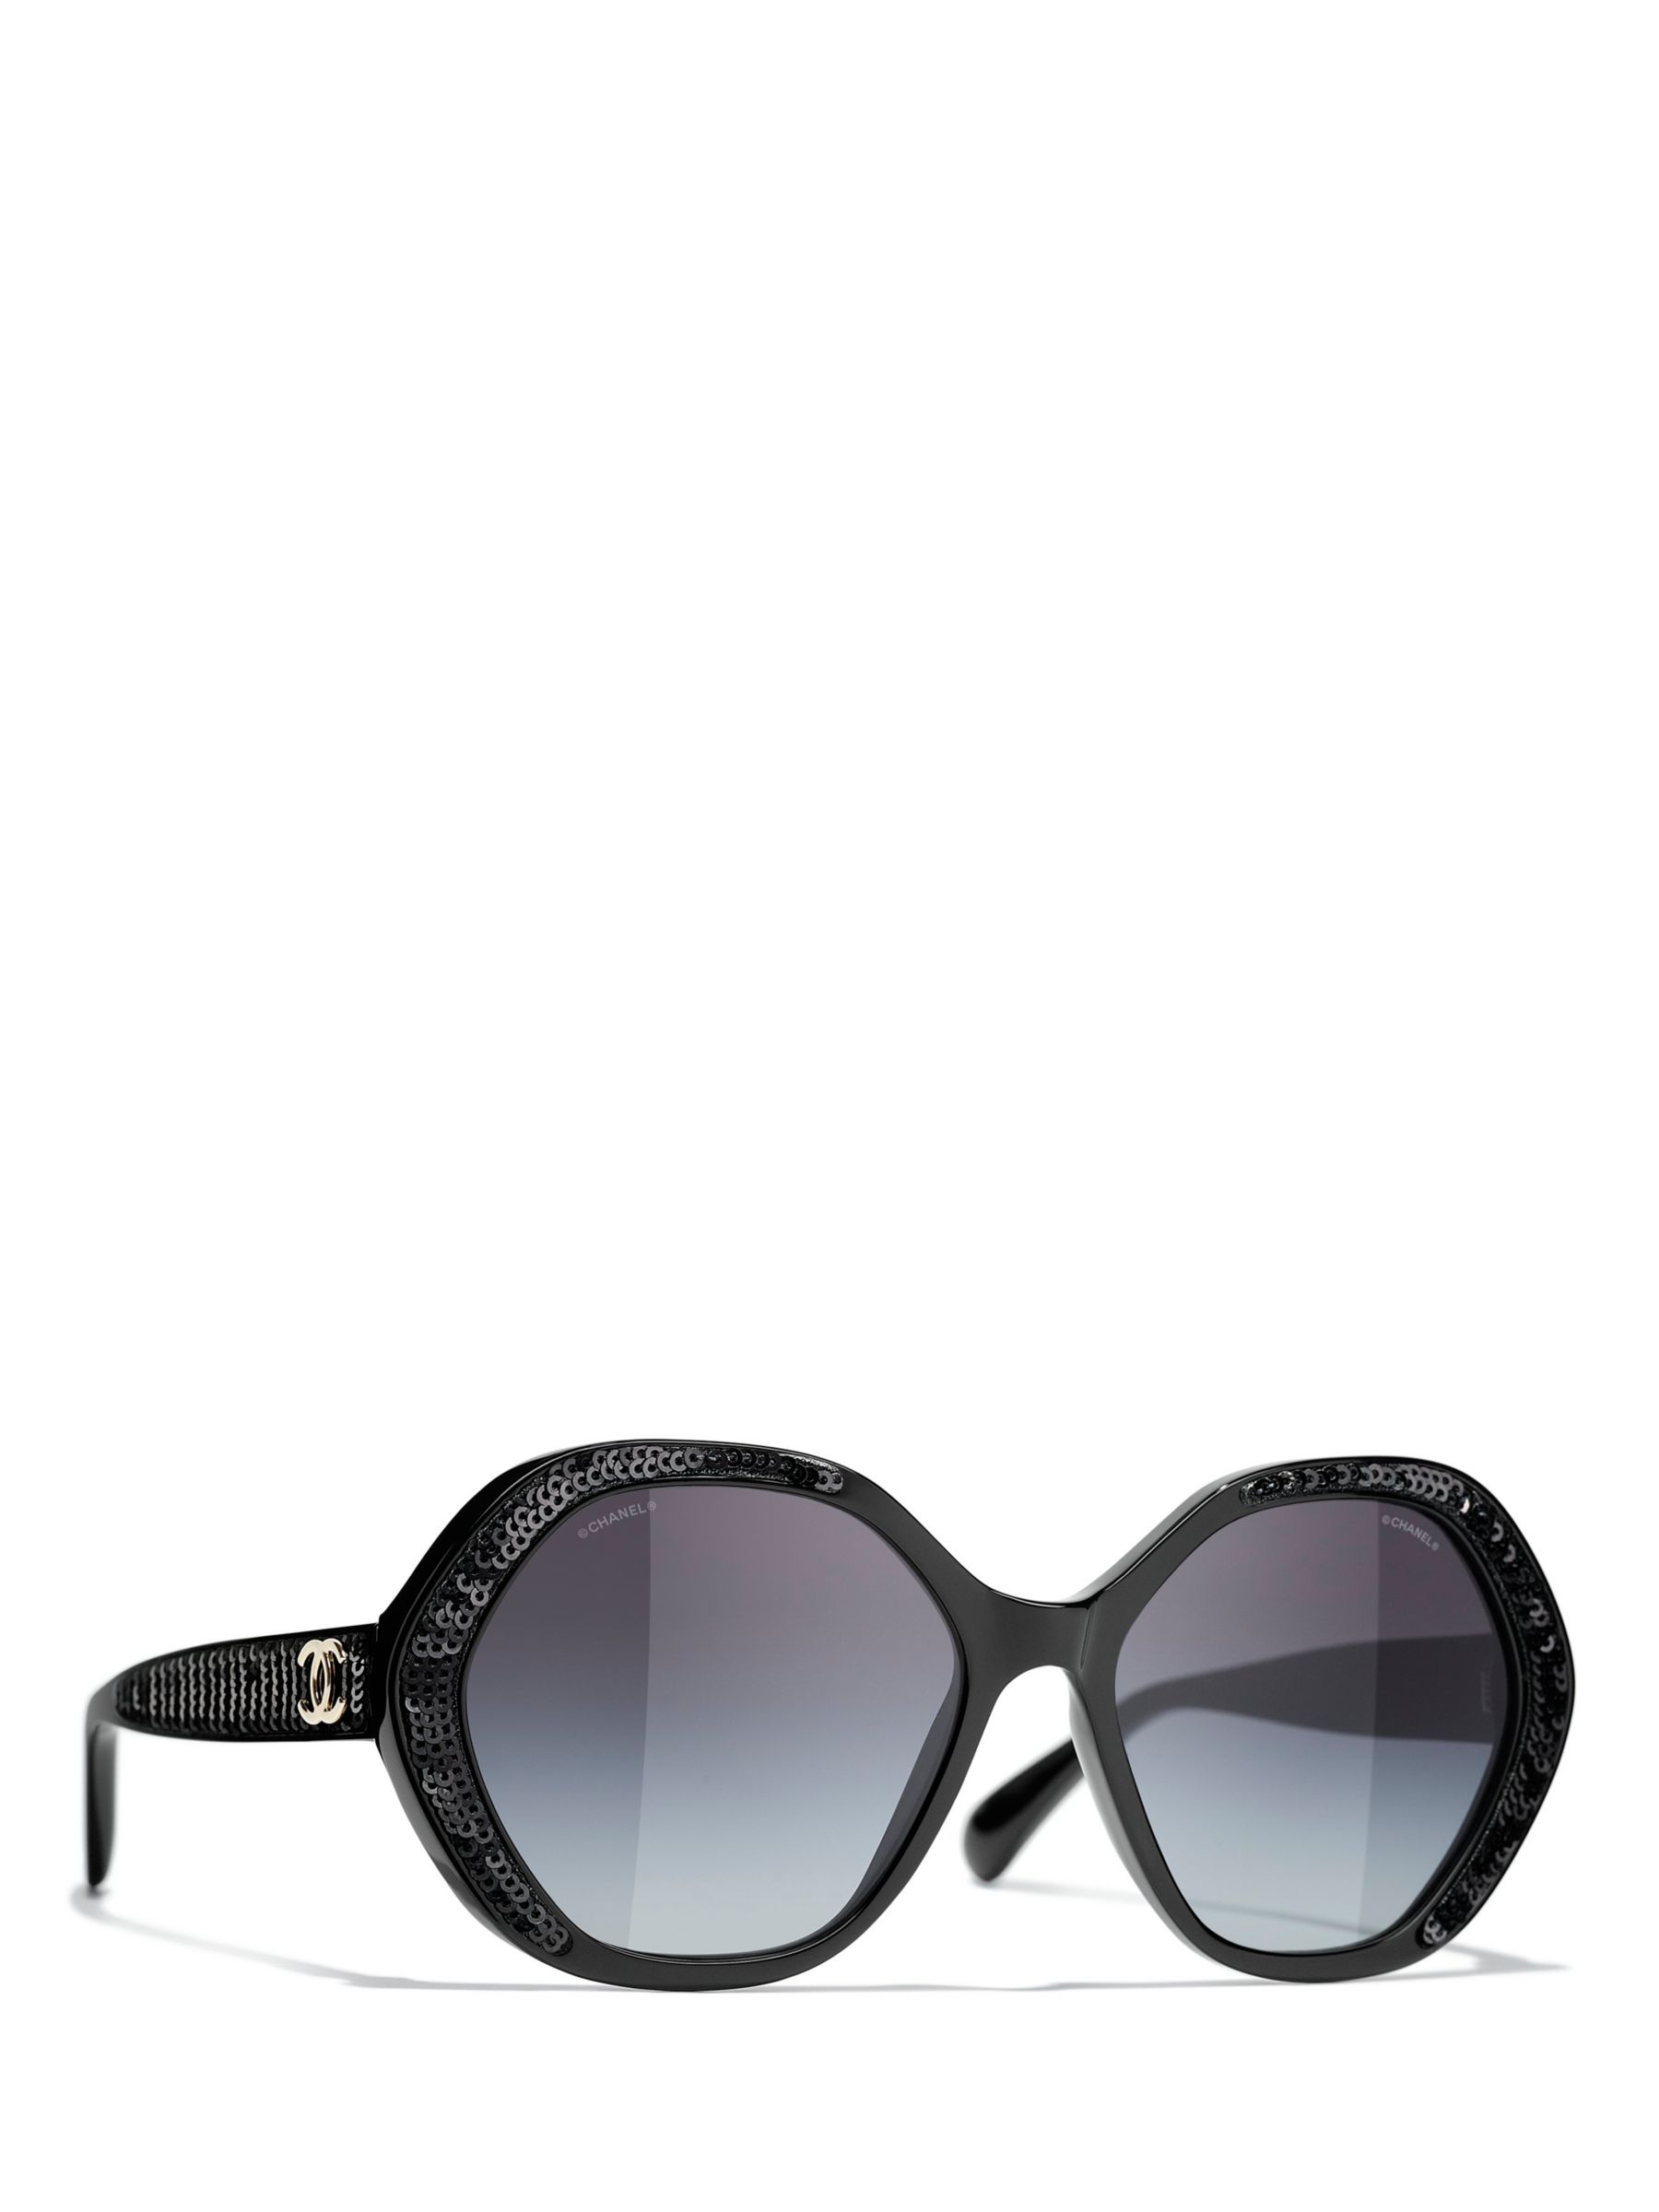 CHANEL Irregular Sunglasses CH5451 Shiny Black/Grey Gradient at John ...